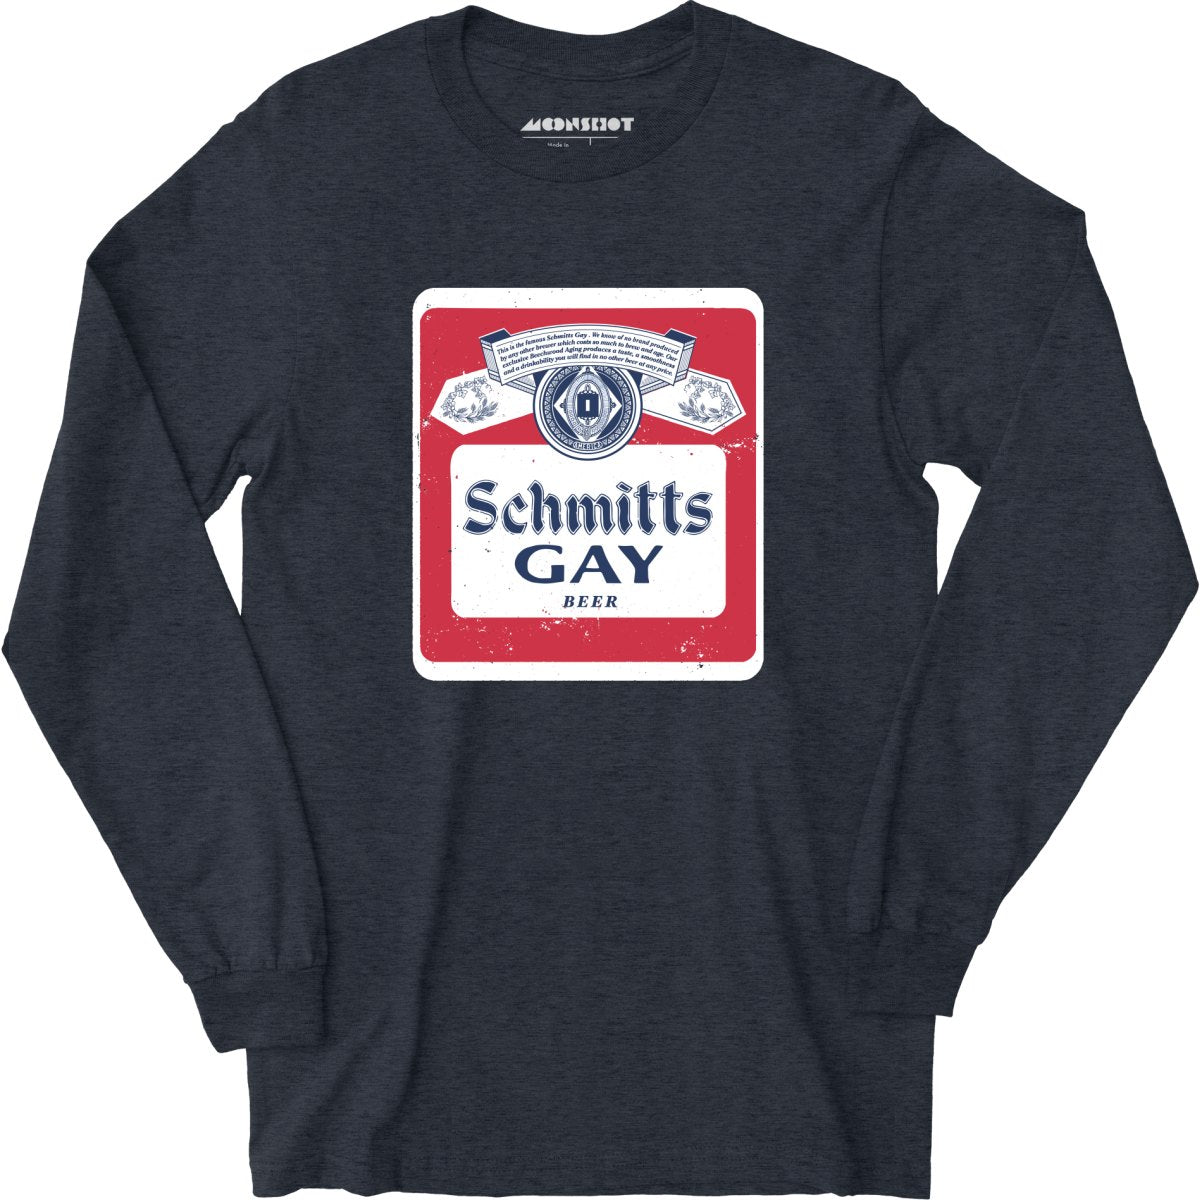 Schmitts Gay Beer - Long Sleeve T-Shirt